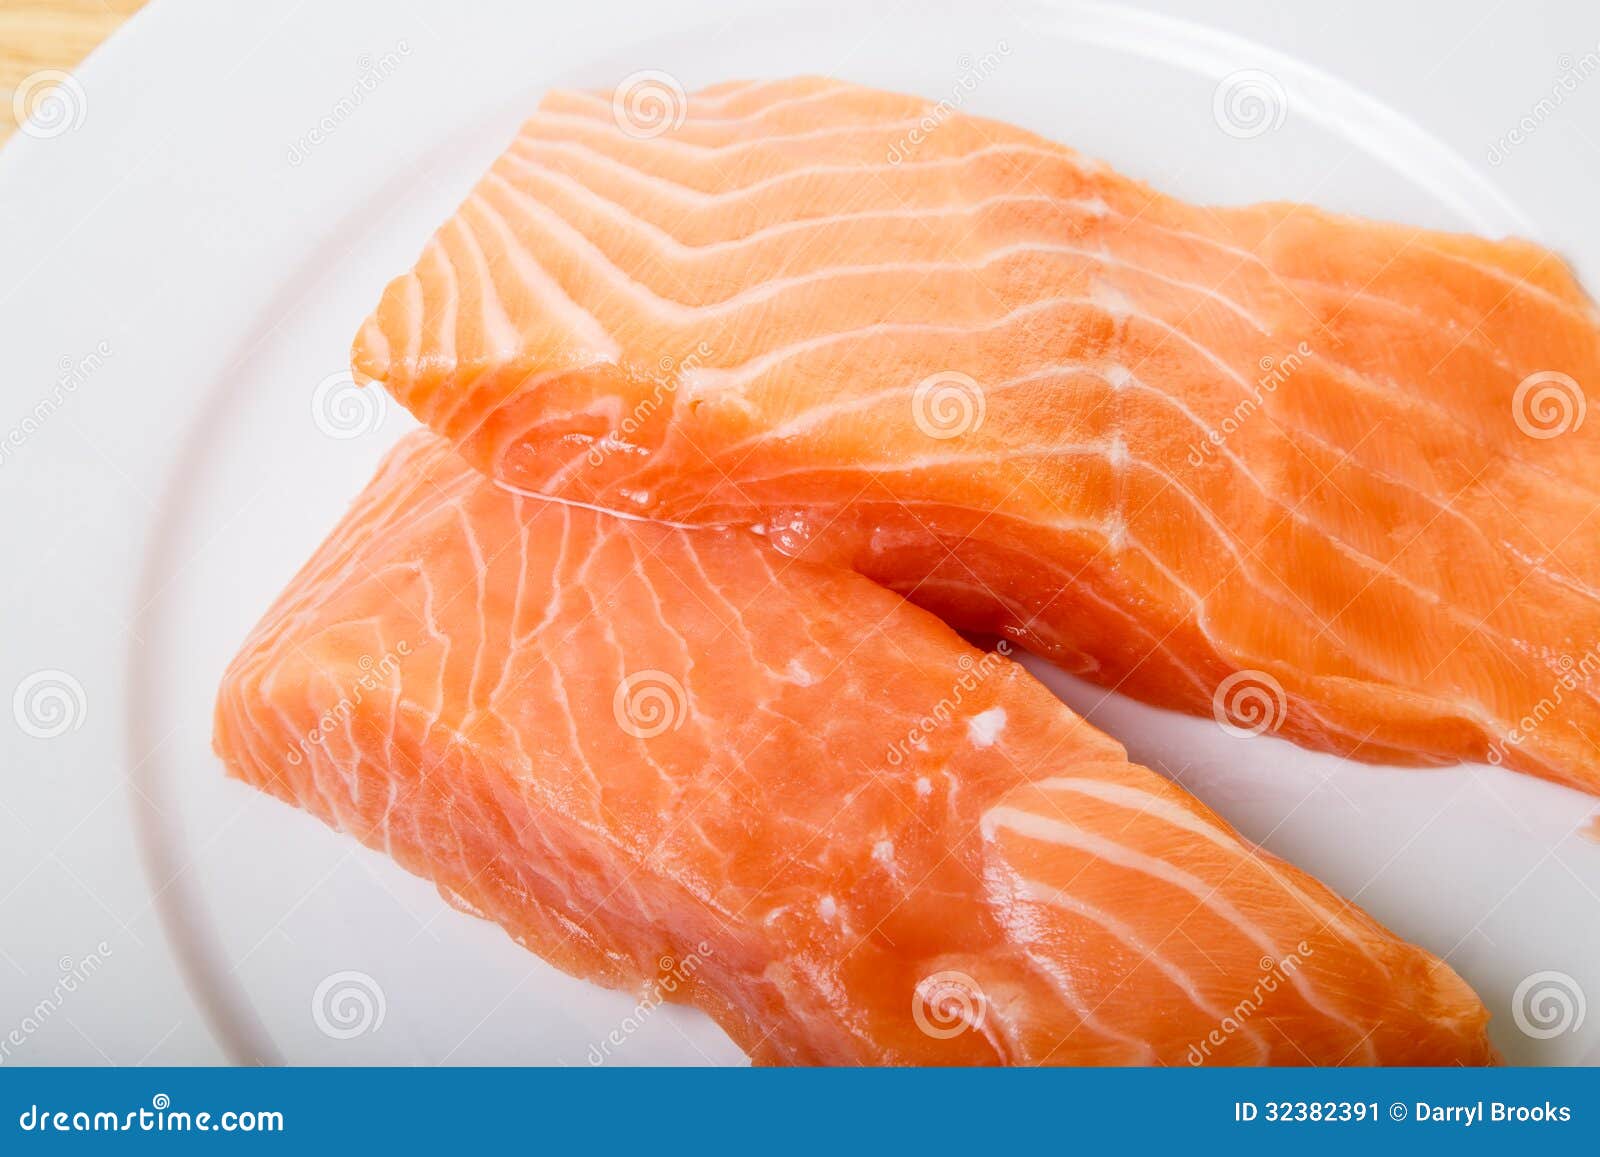 Two Atlantic Salmon Fillets Closeup Stock Image - Image of white ...